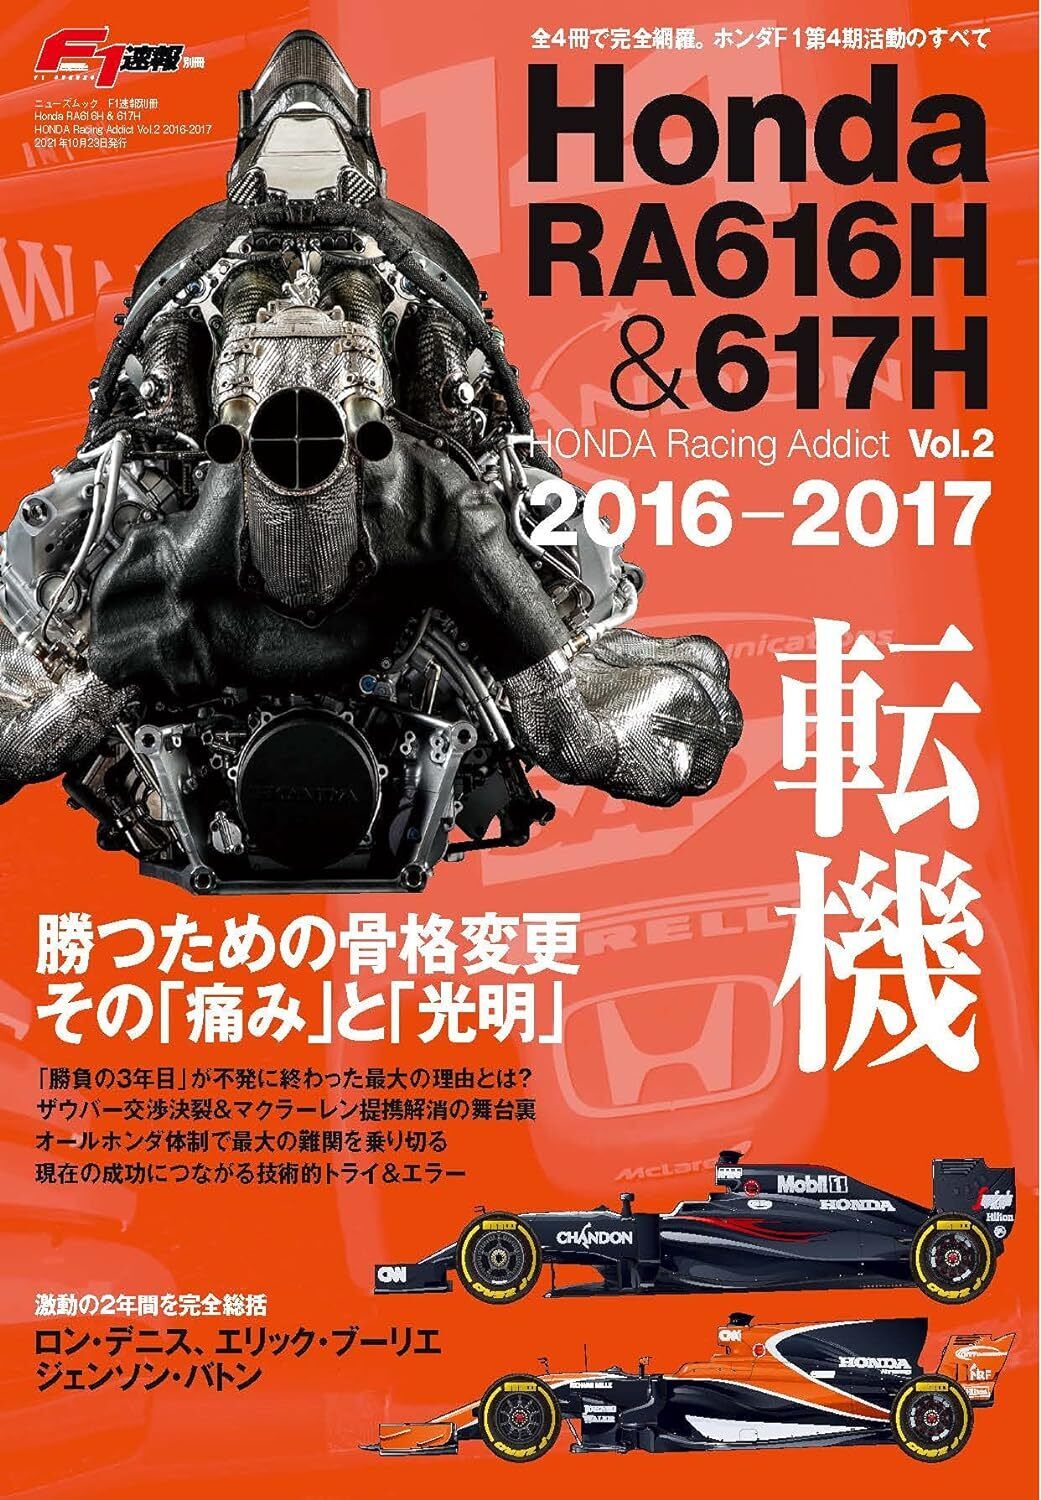 Honda RA616H & 617H HONDA Racing Addict Vol.2 2016-2017 Japanese book New